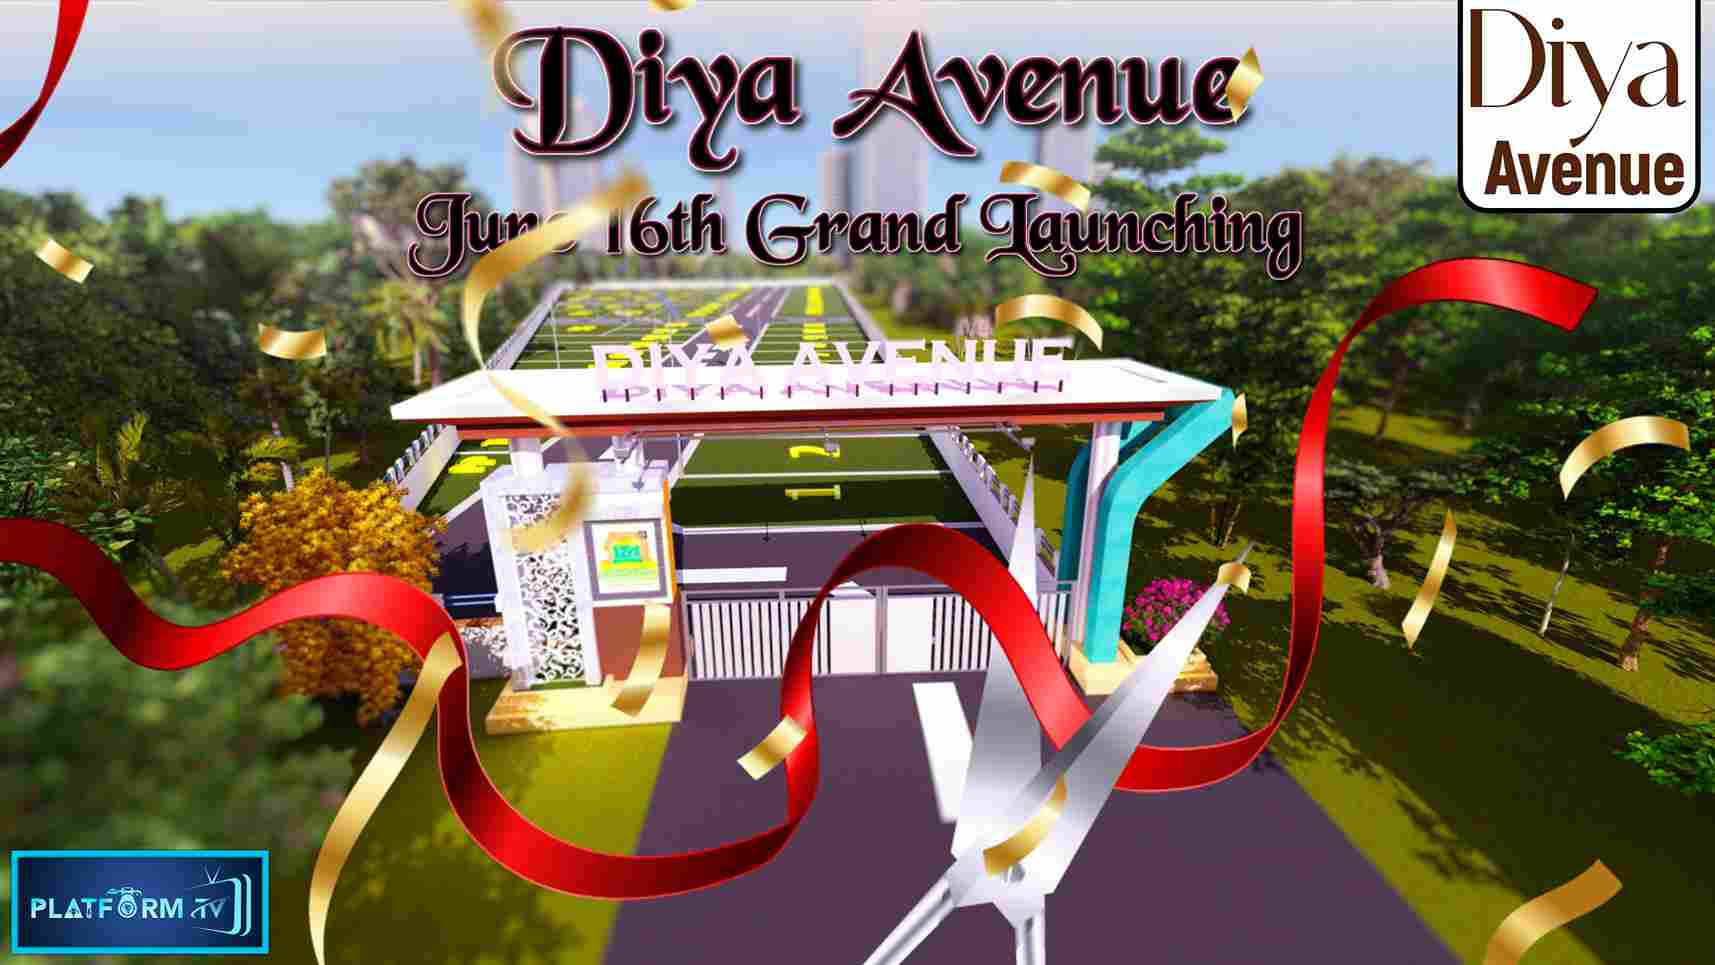 Grand Launch Of Diya Avenue Plots - Platform Tamil